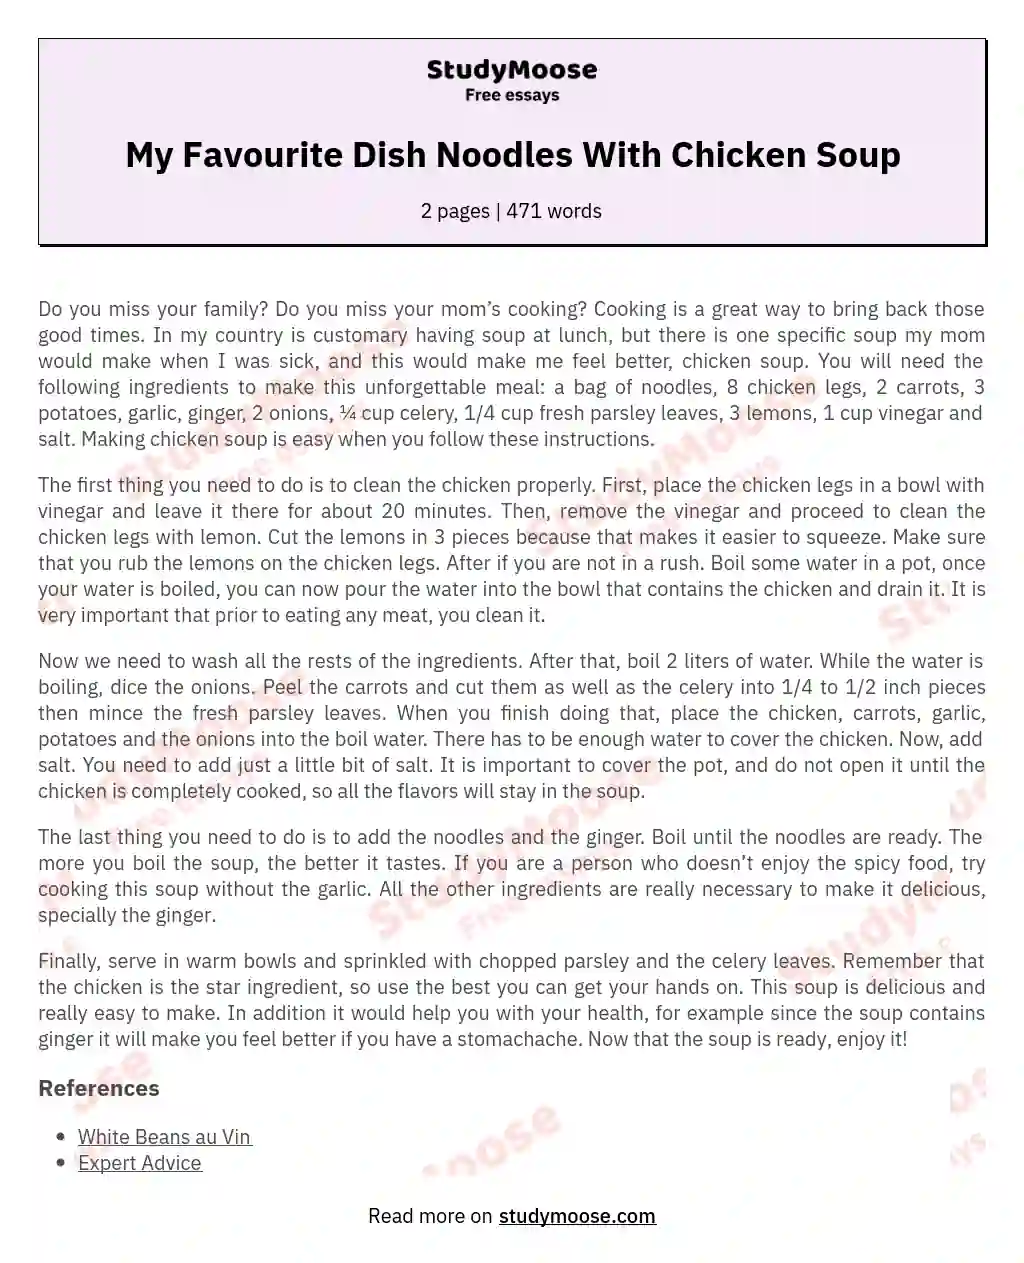 my favorite food noodles essay